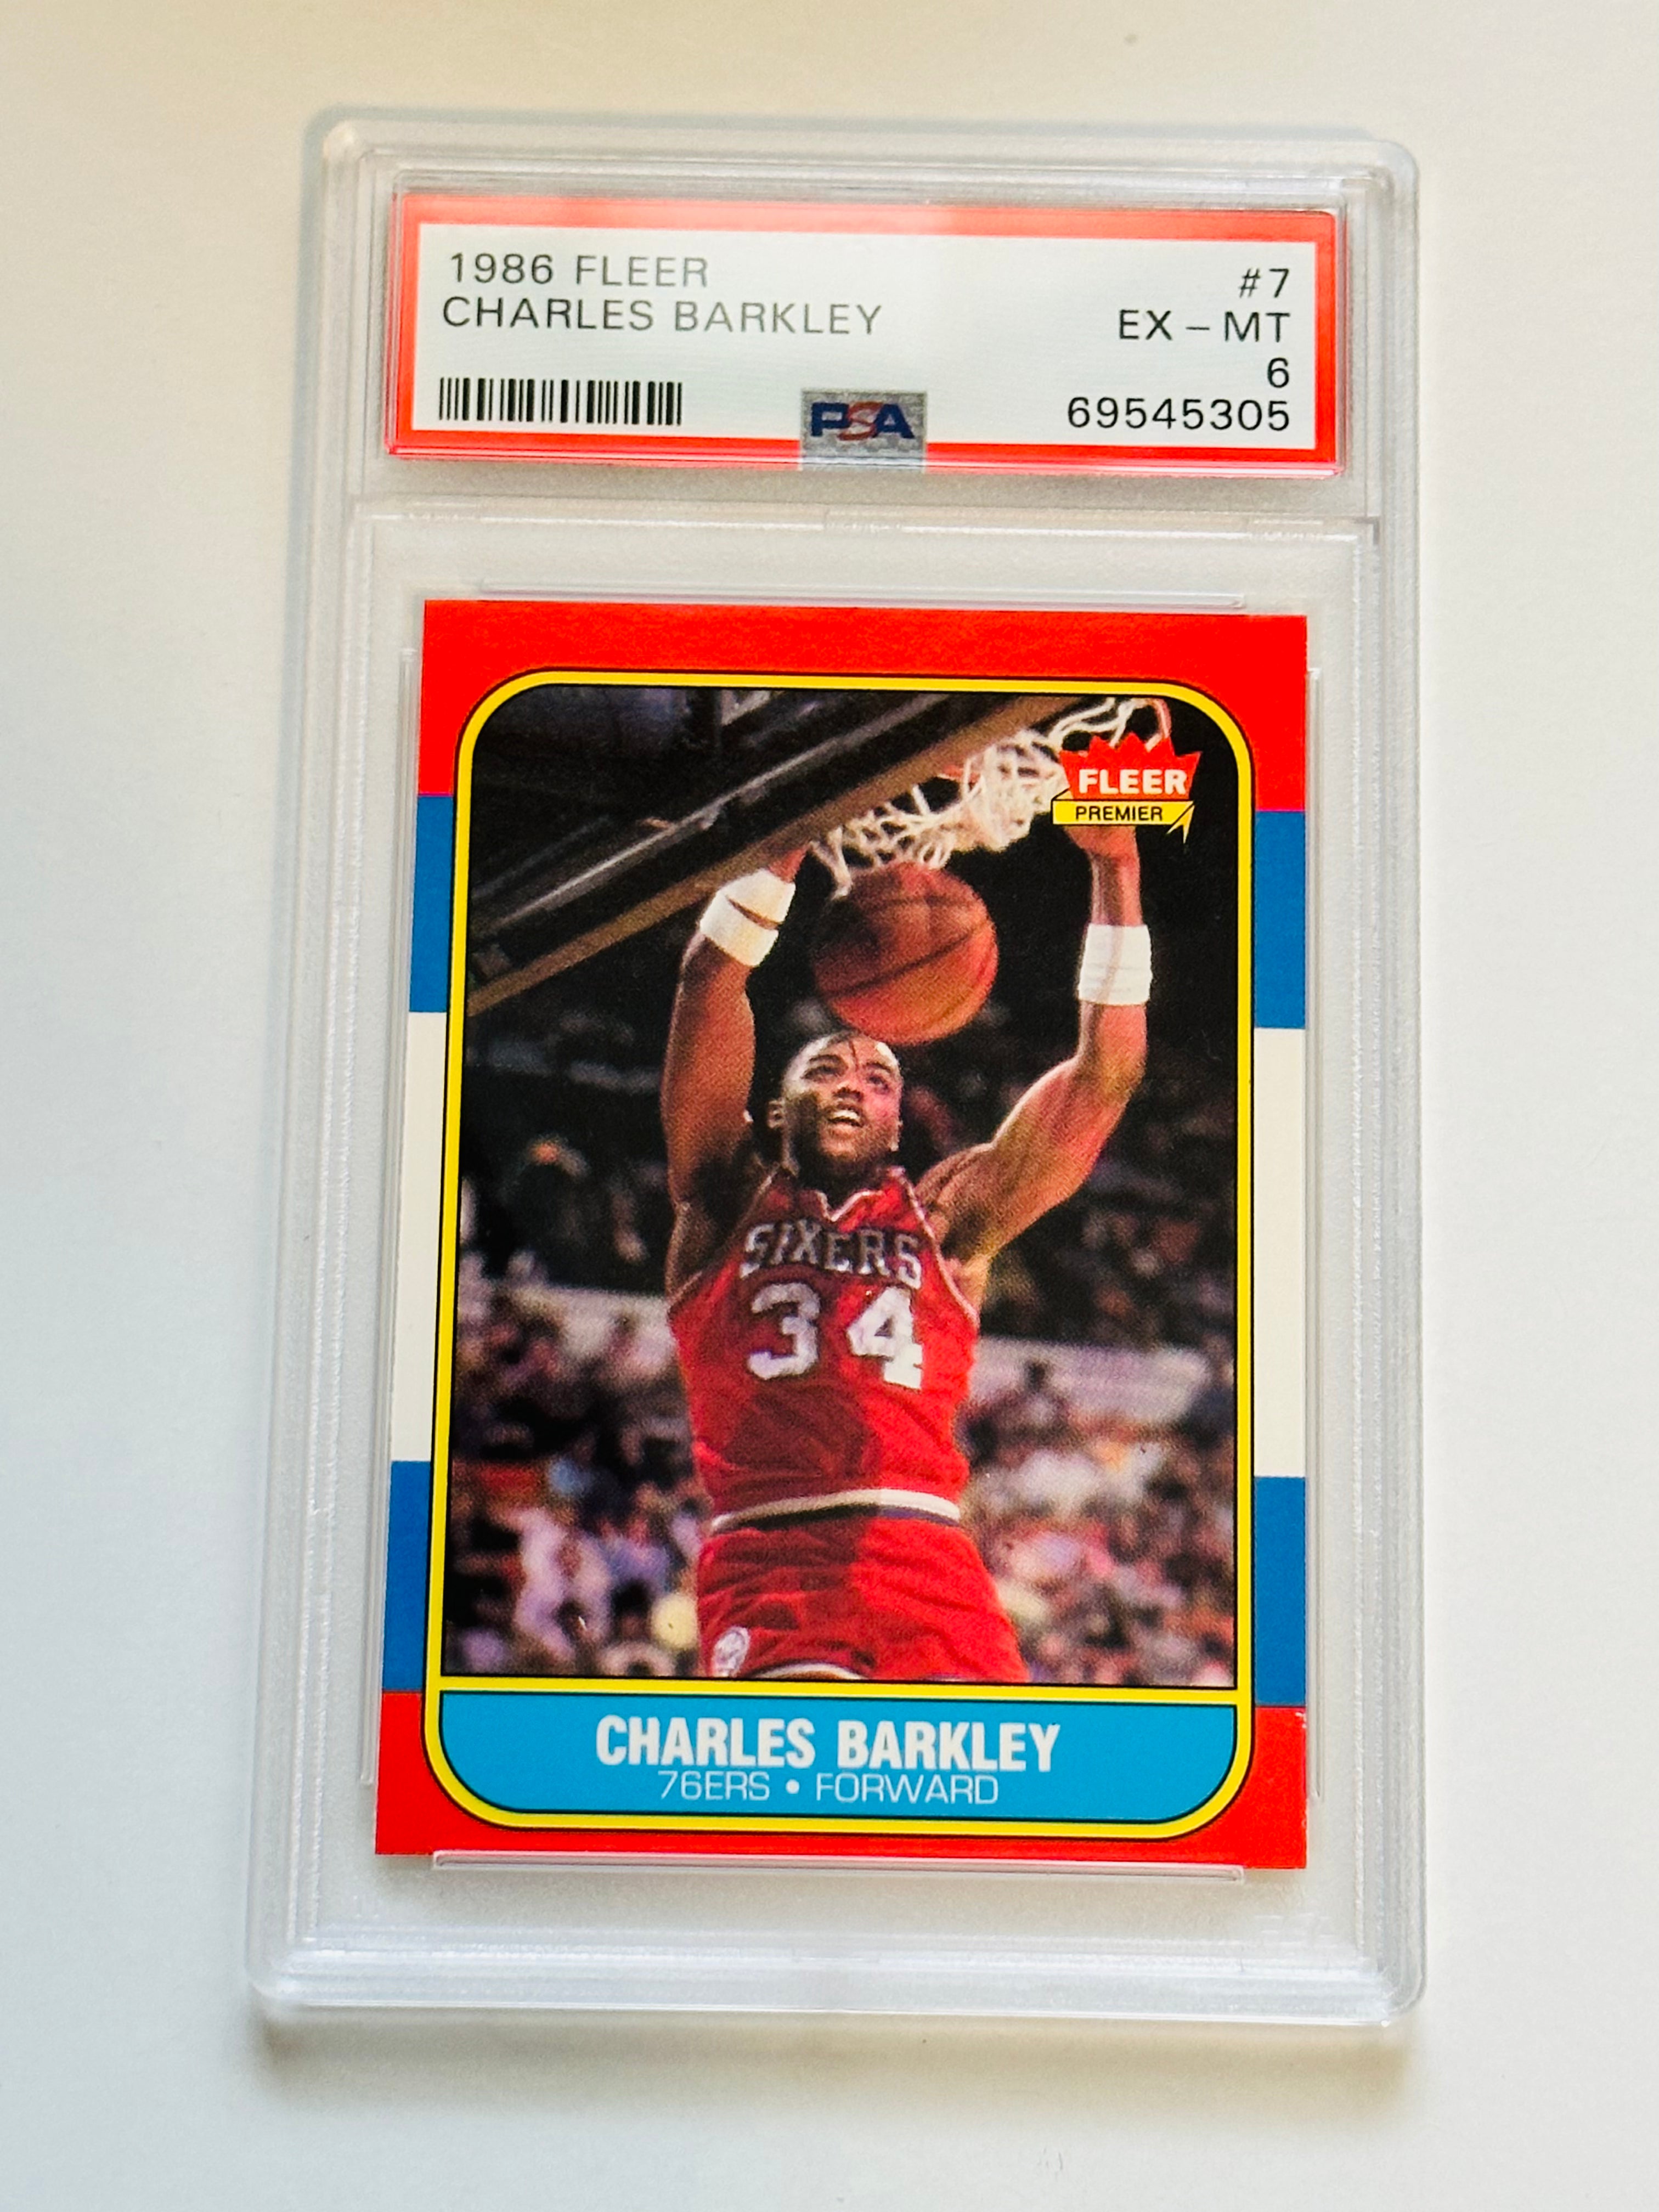 Charles Barkley Fleer Rookie PSA 6 high graded card 1986